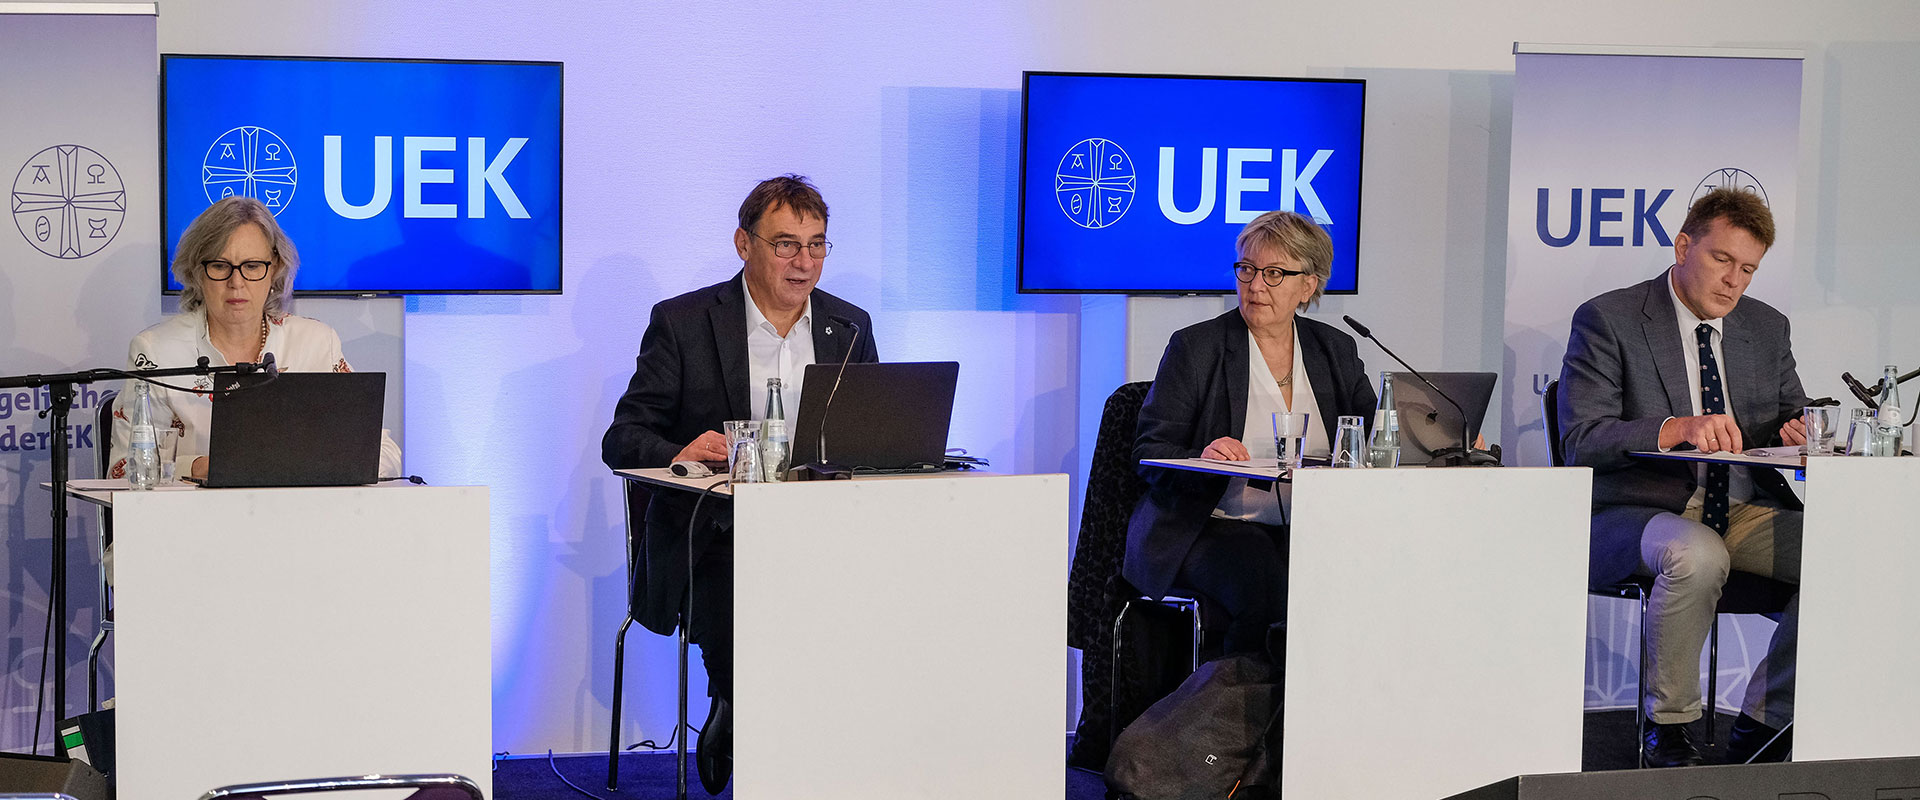 Das Präsidium der UEK, UEK / Jens Schulze